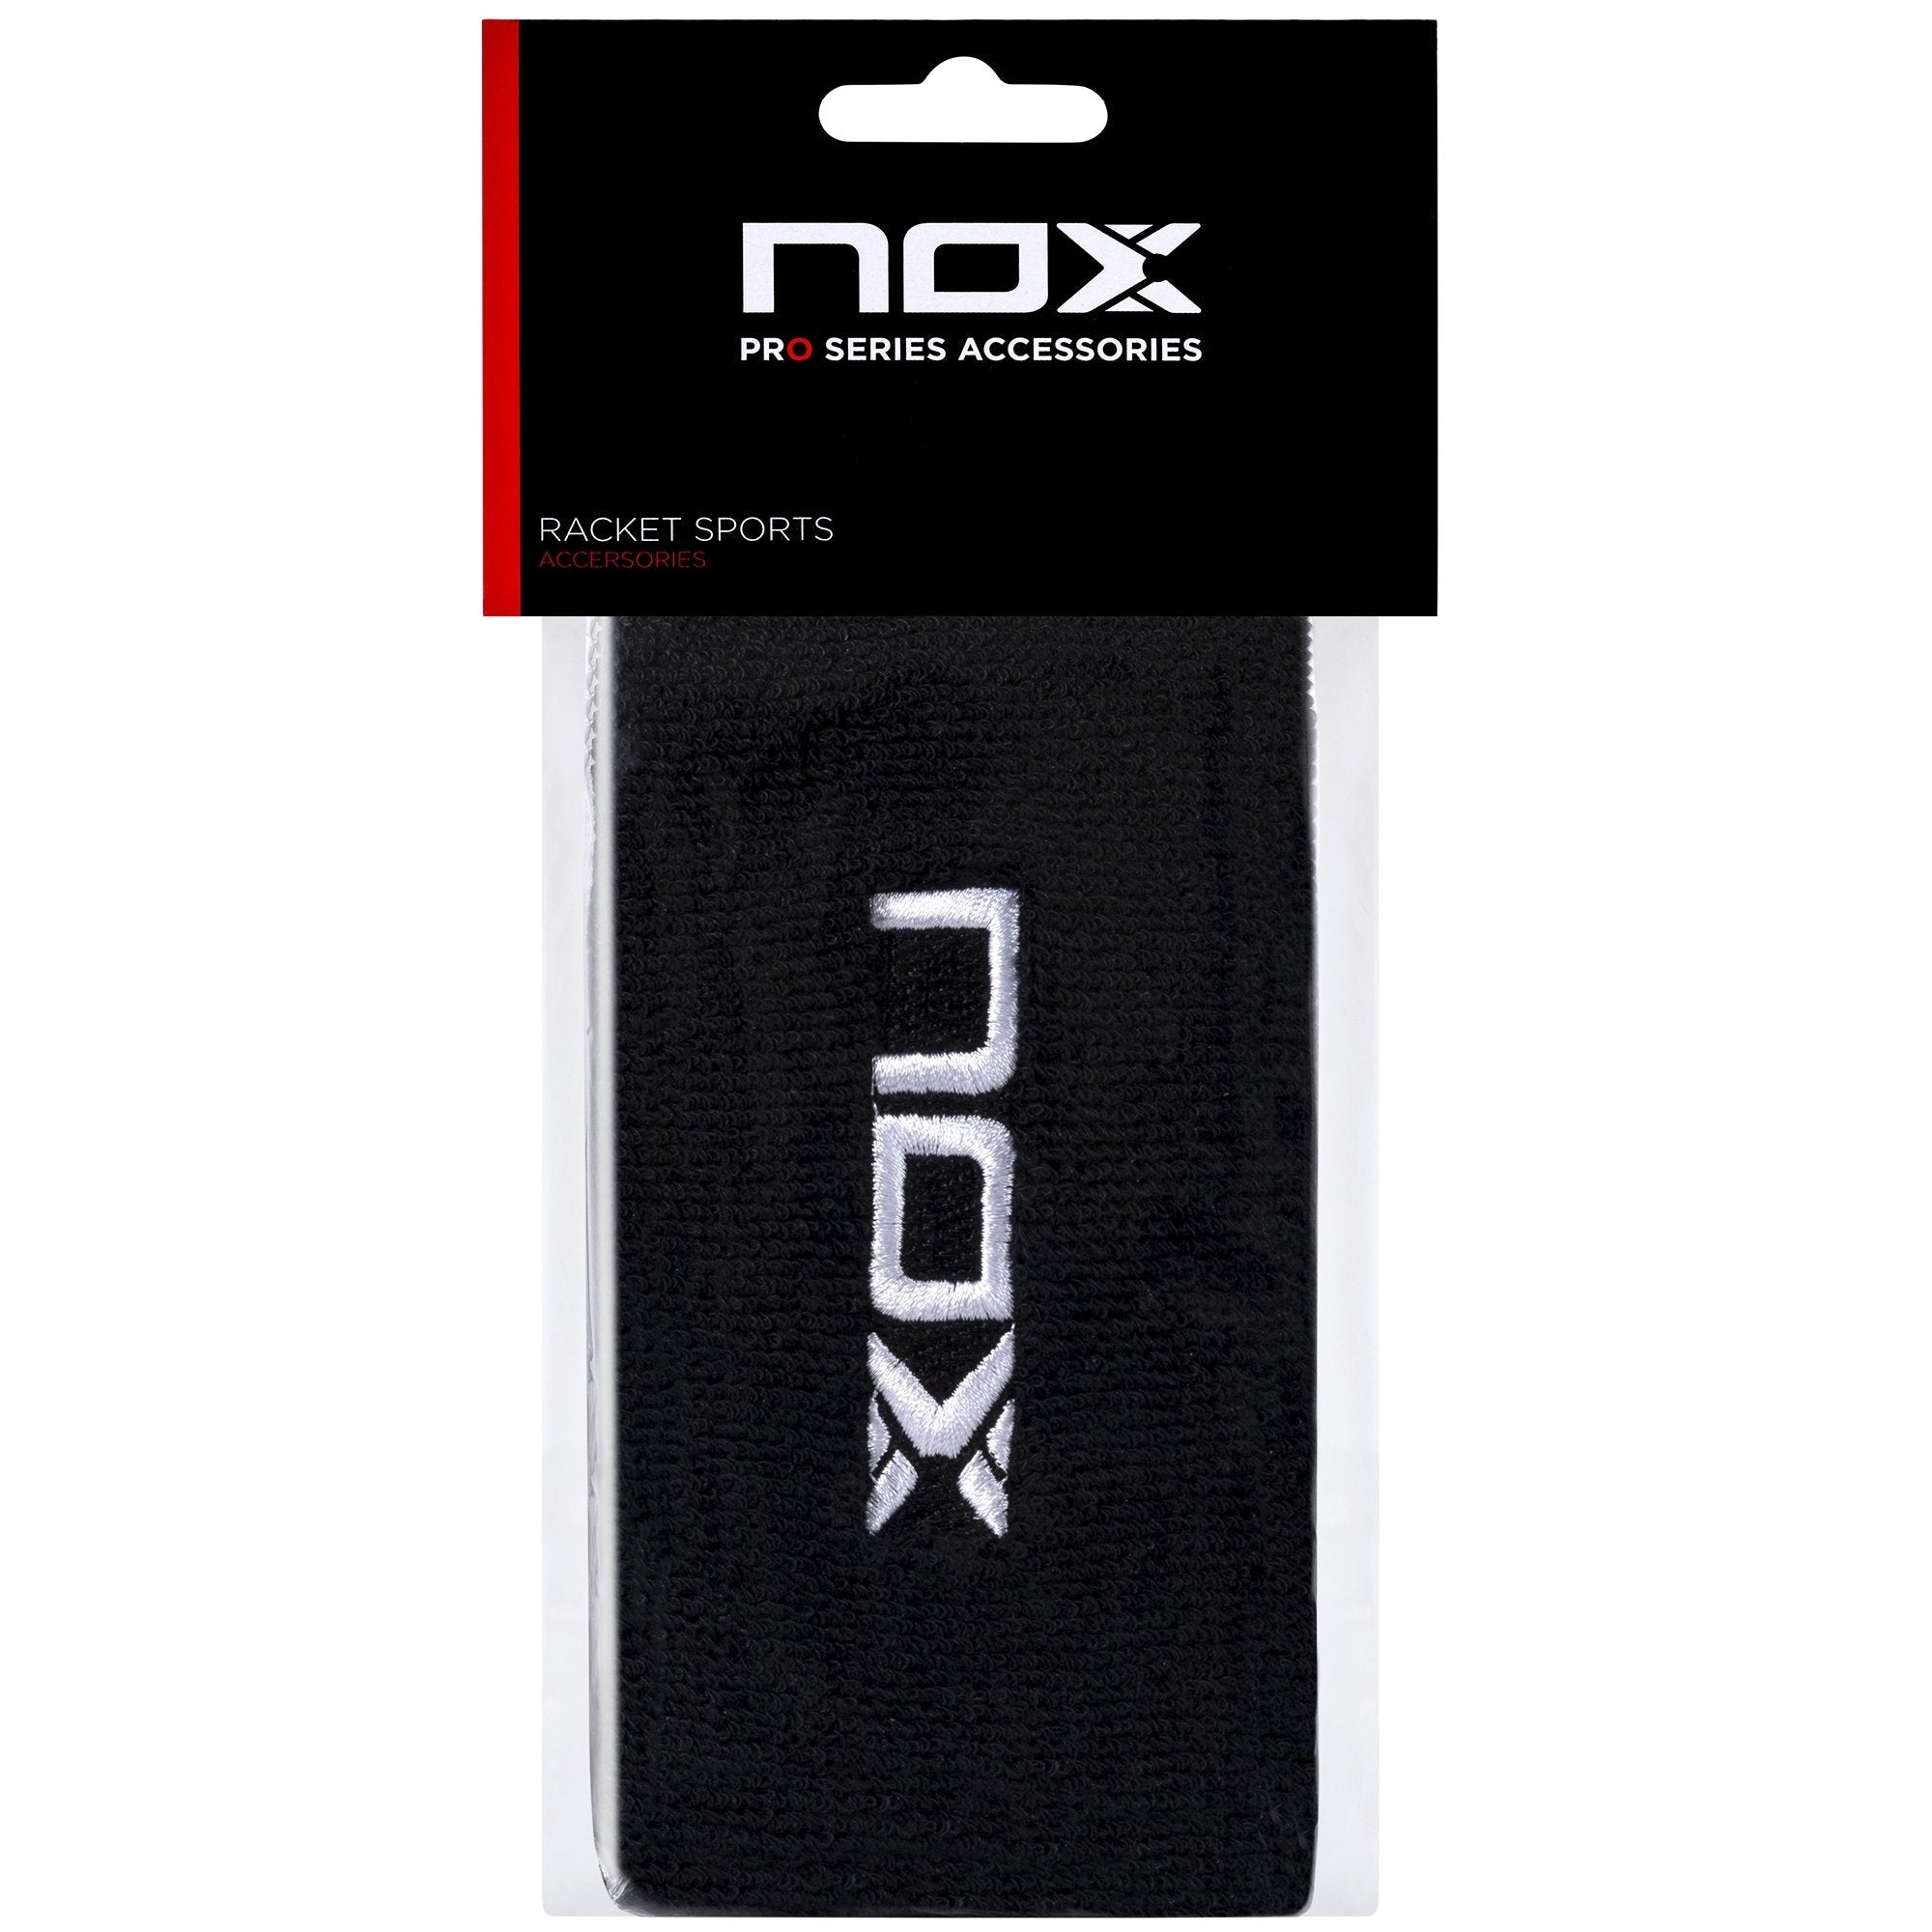 NOX Pro Muñequeras de Padel - White/Blue